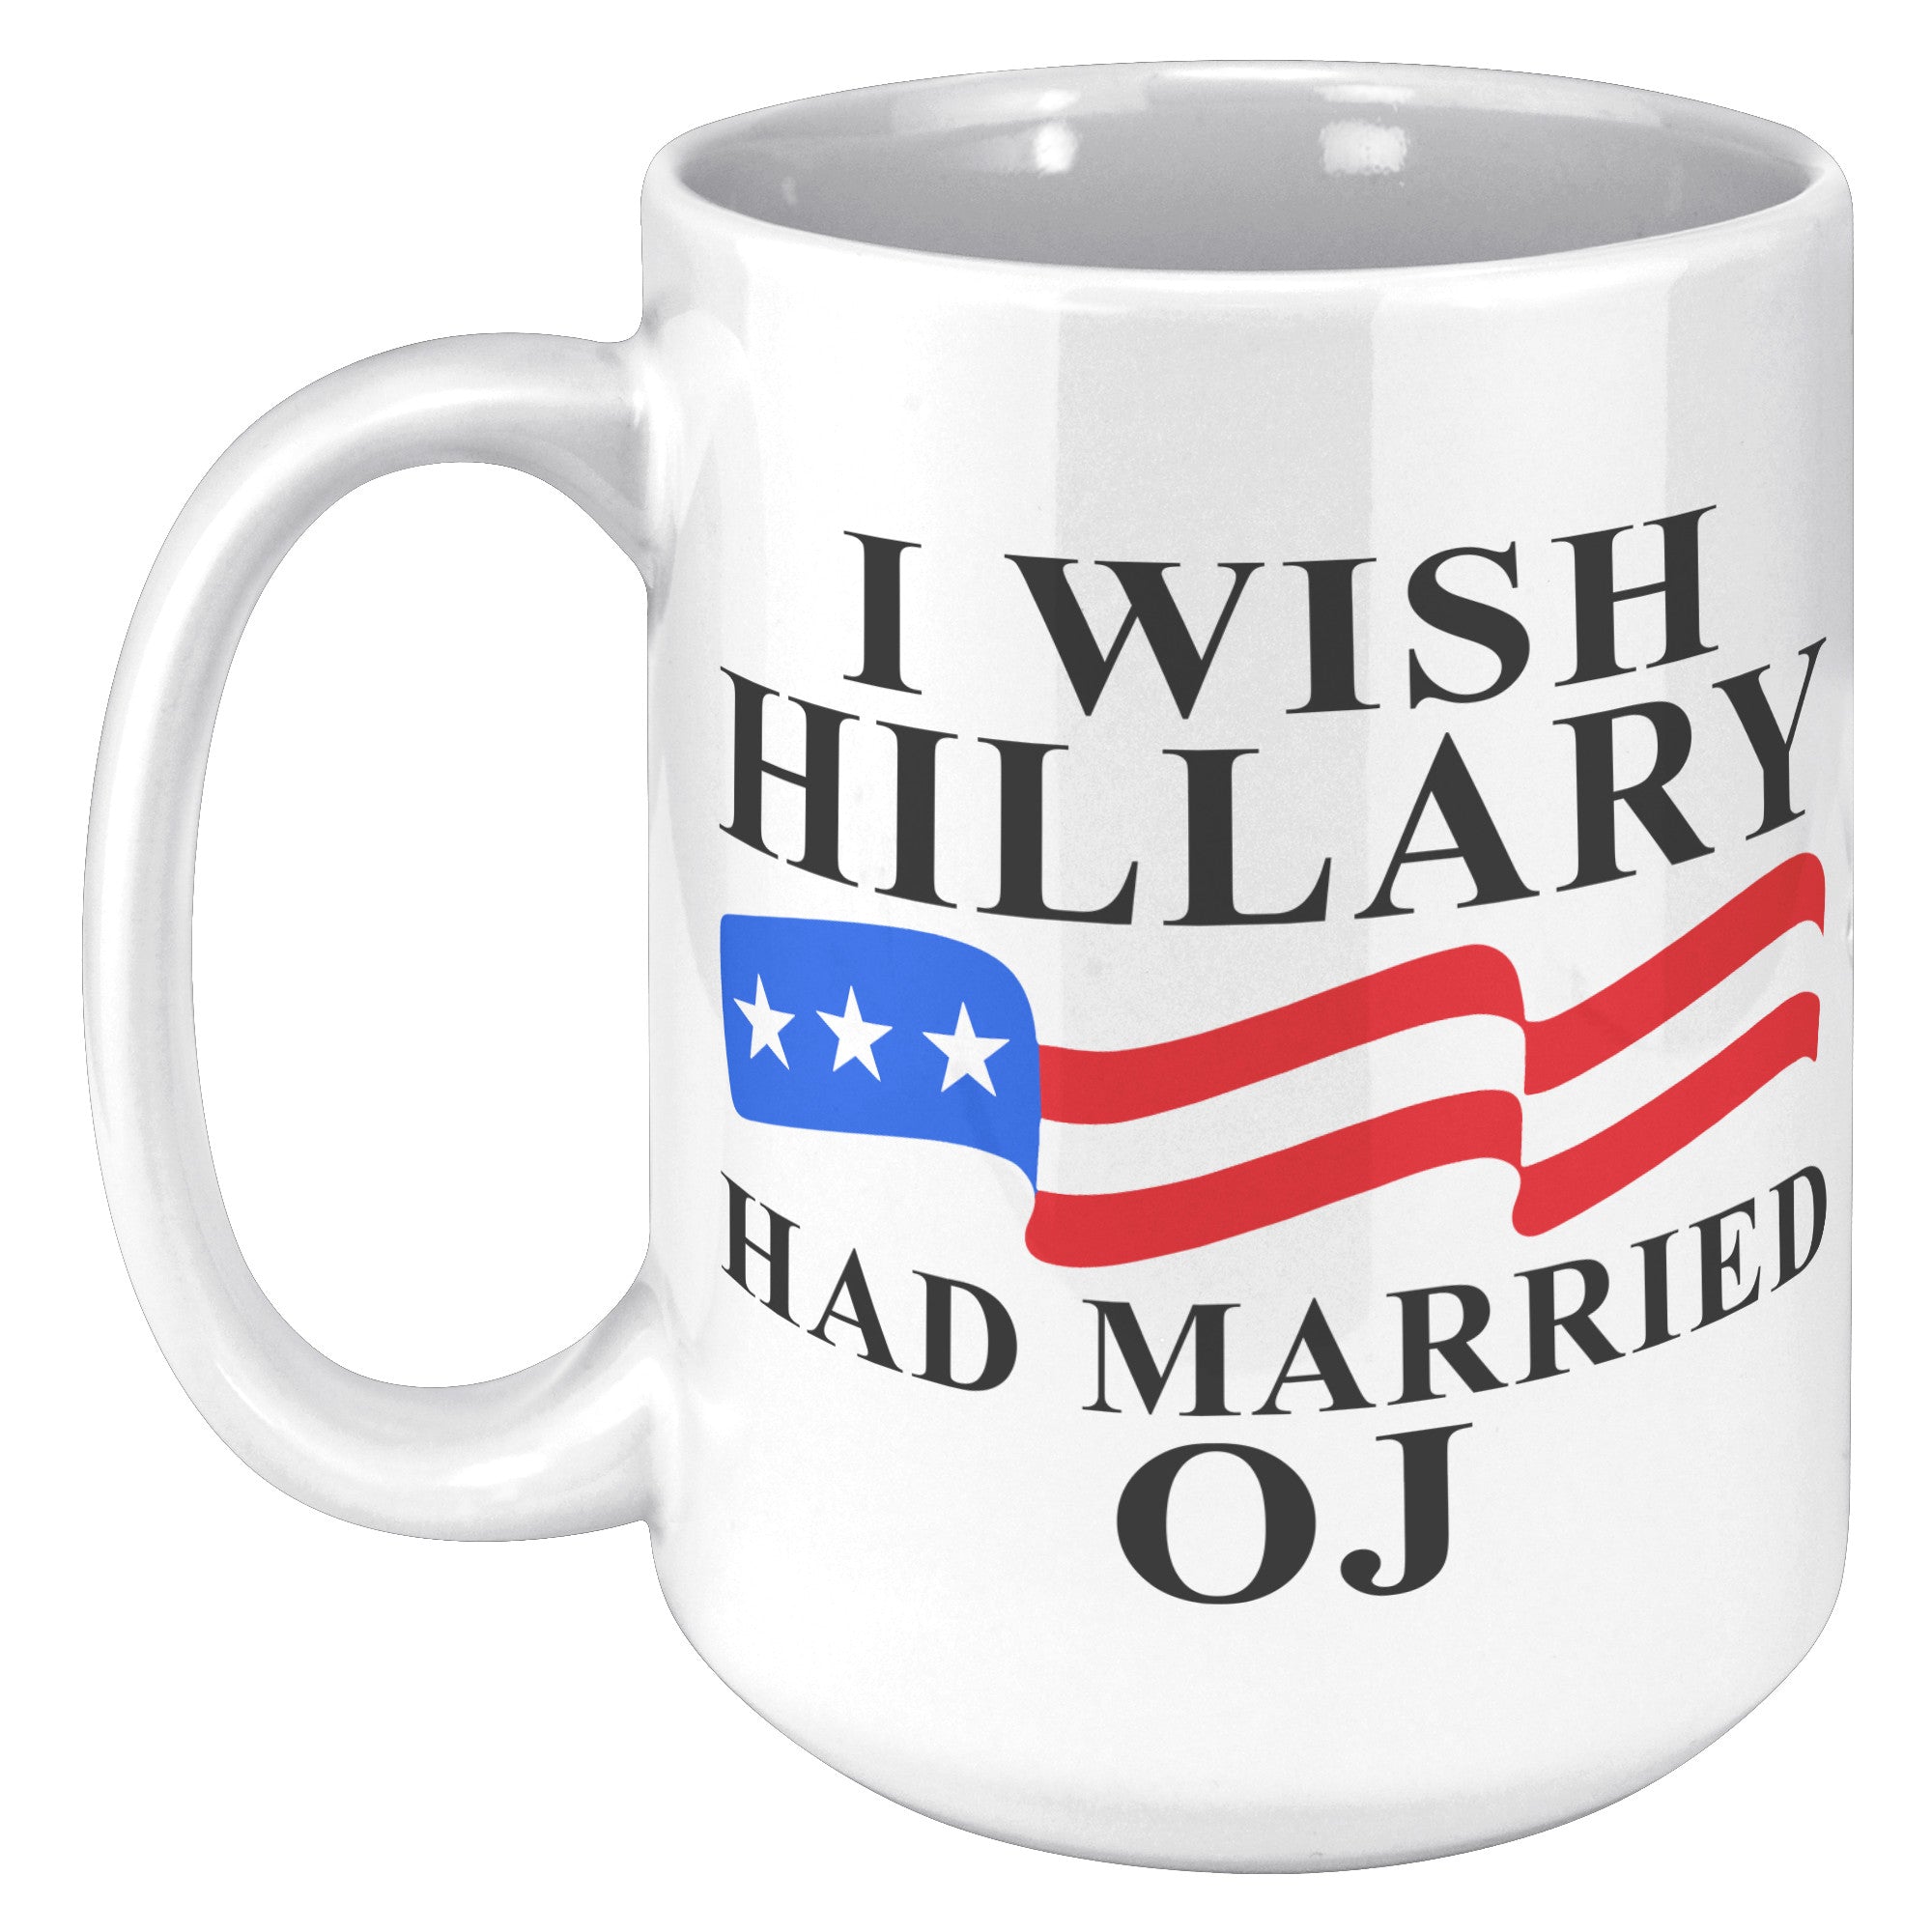 I Wish Hillary Had Married OJ Coffee Mug -Front/Back | Drunk America 